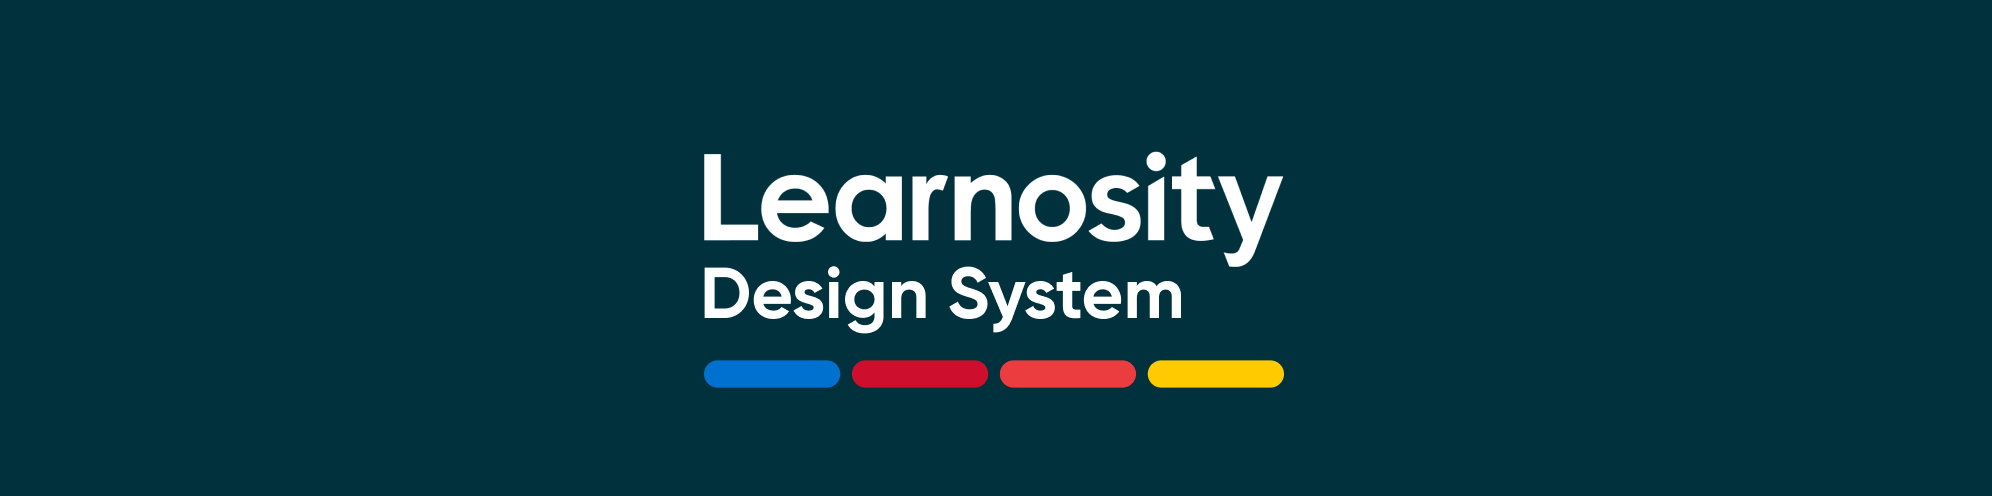 Banner image of Learnosity Design System